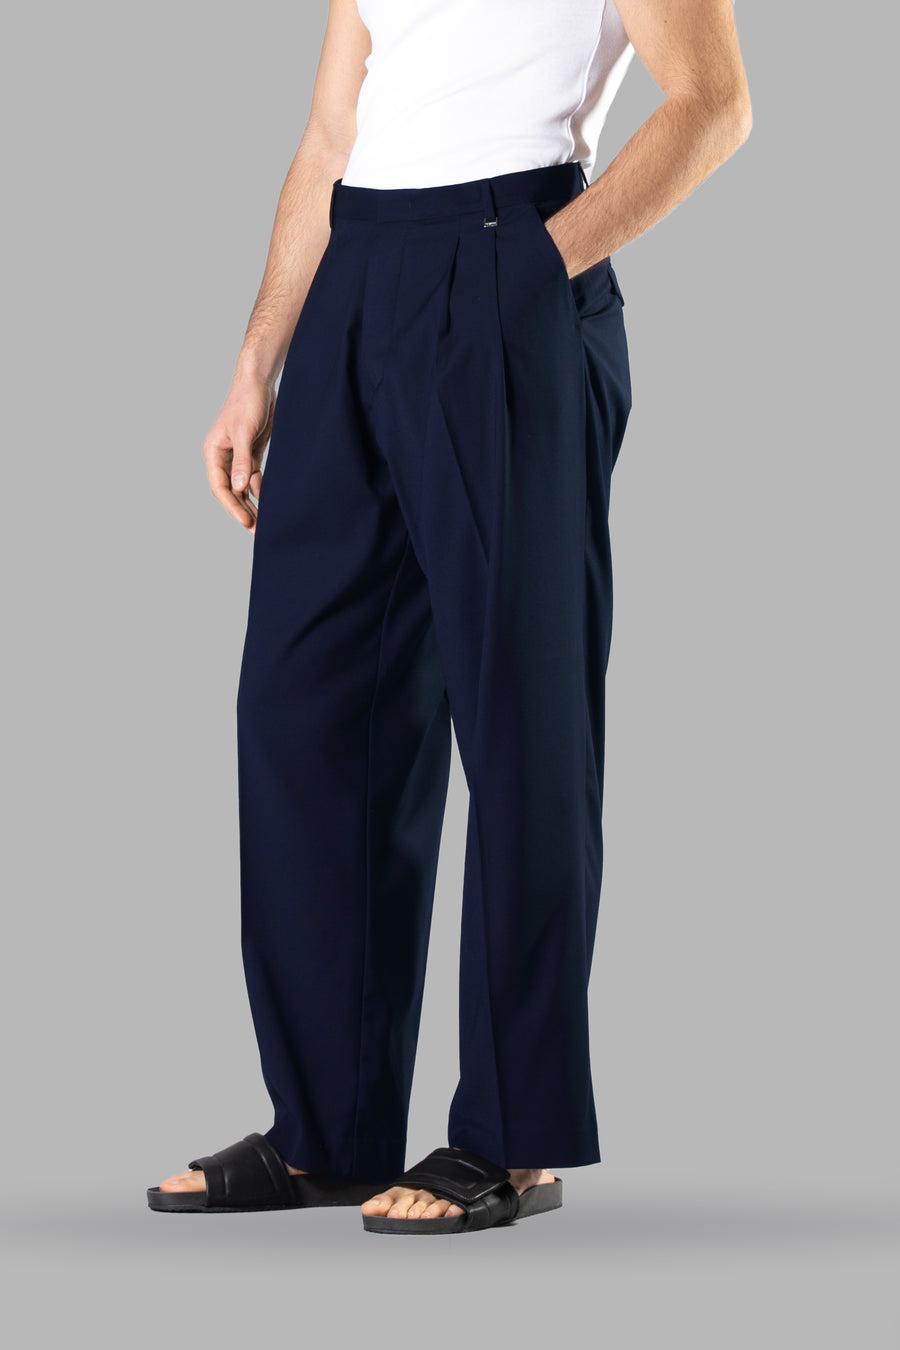 Pantalone fondo ampio doppia pinces - Blu